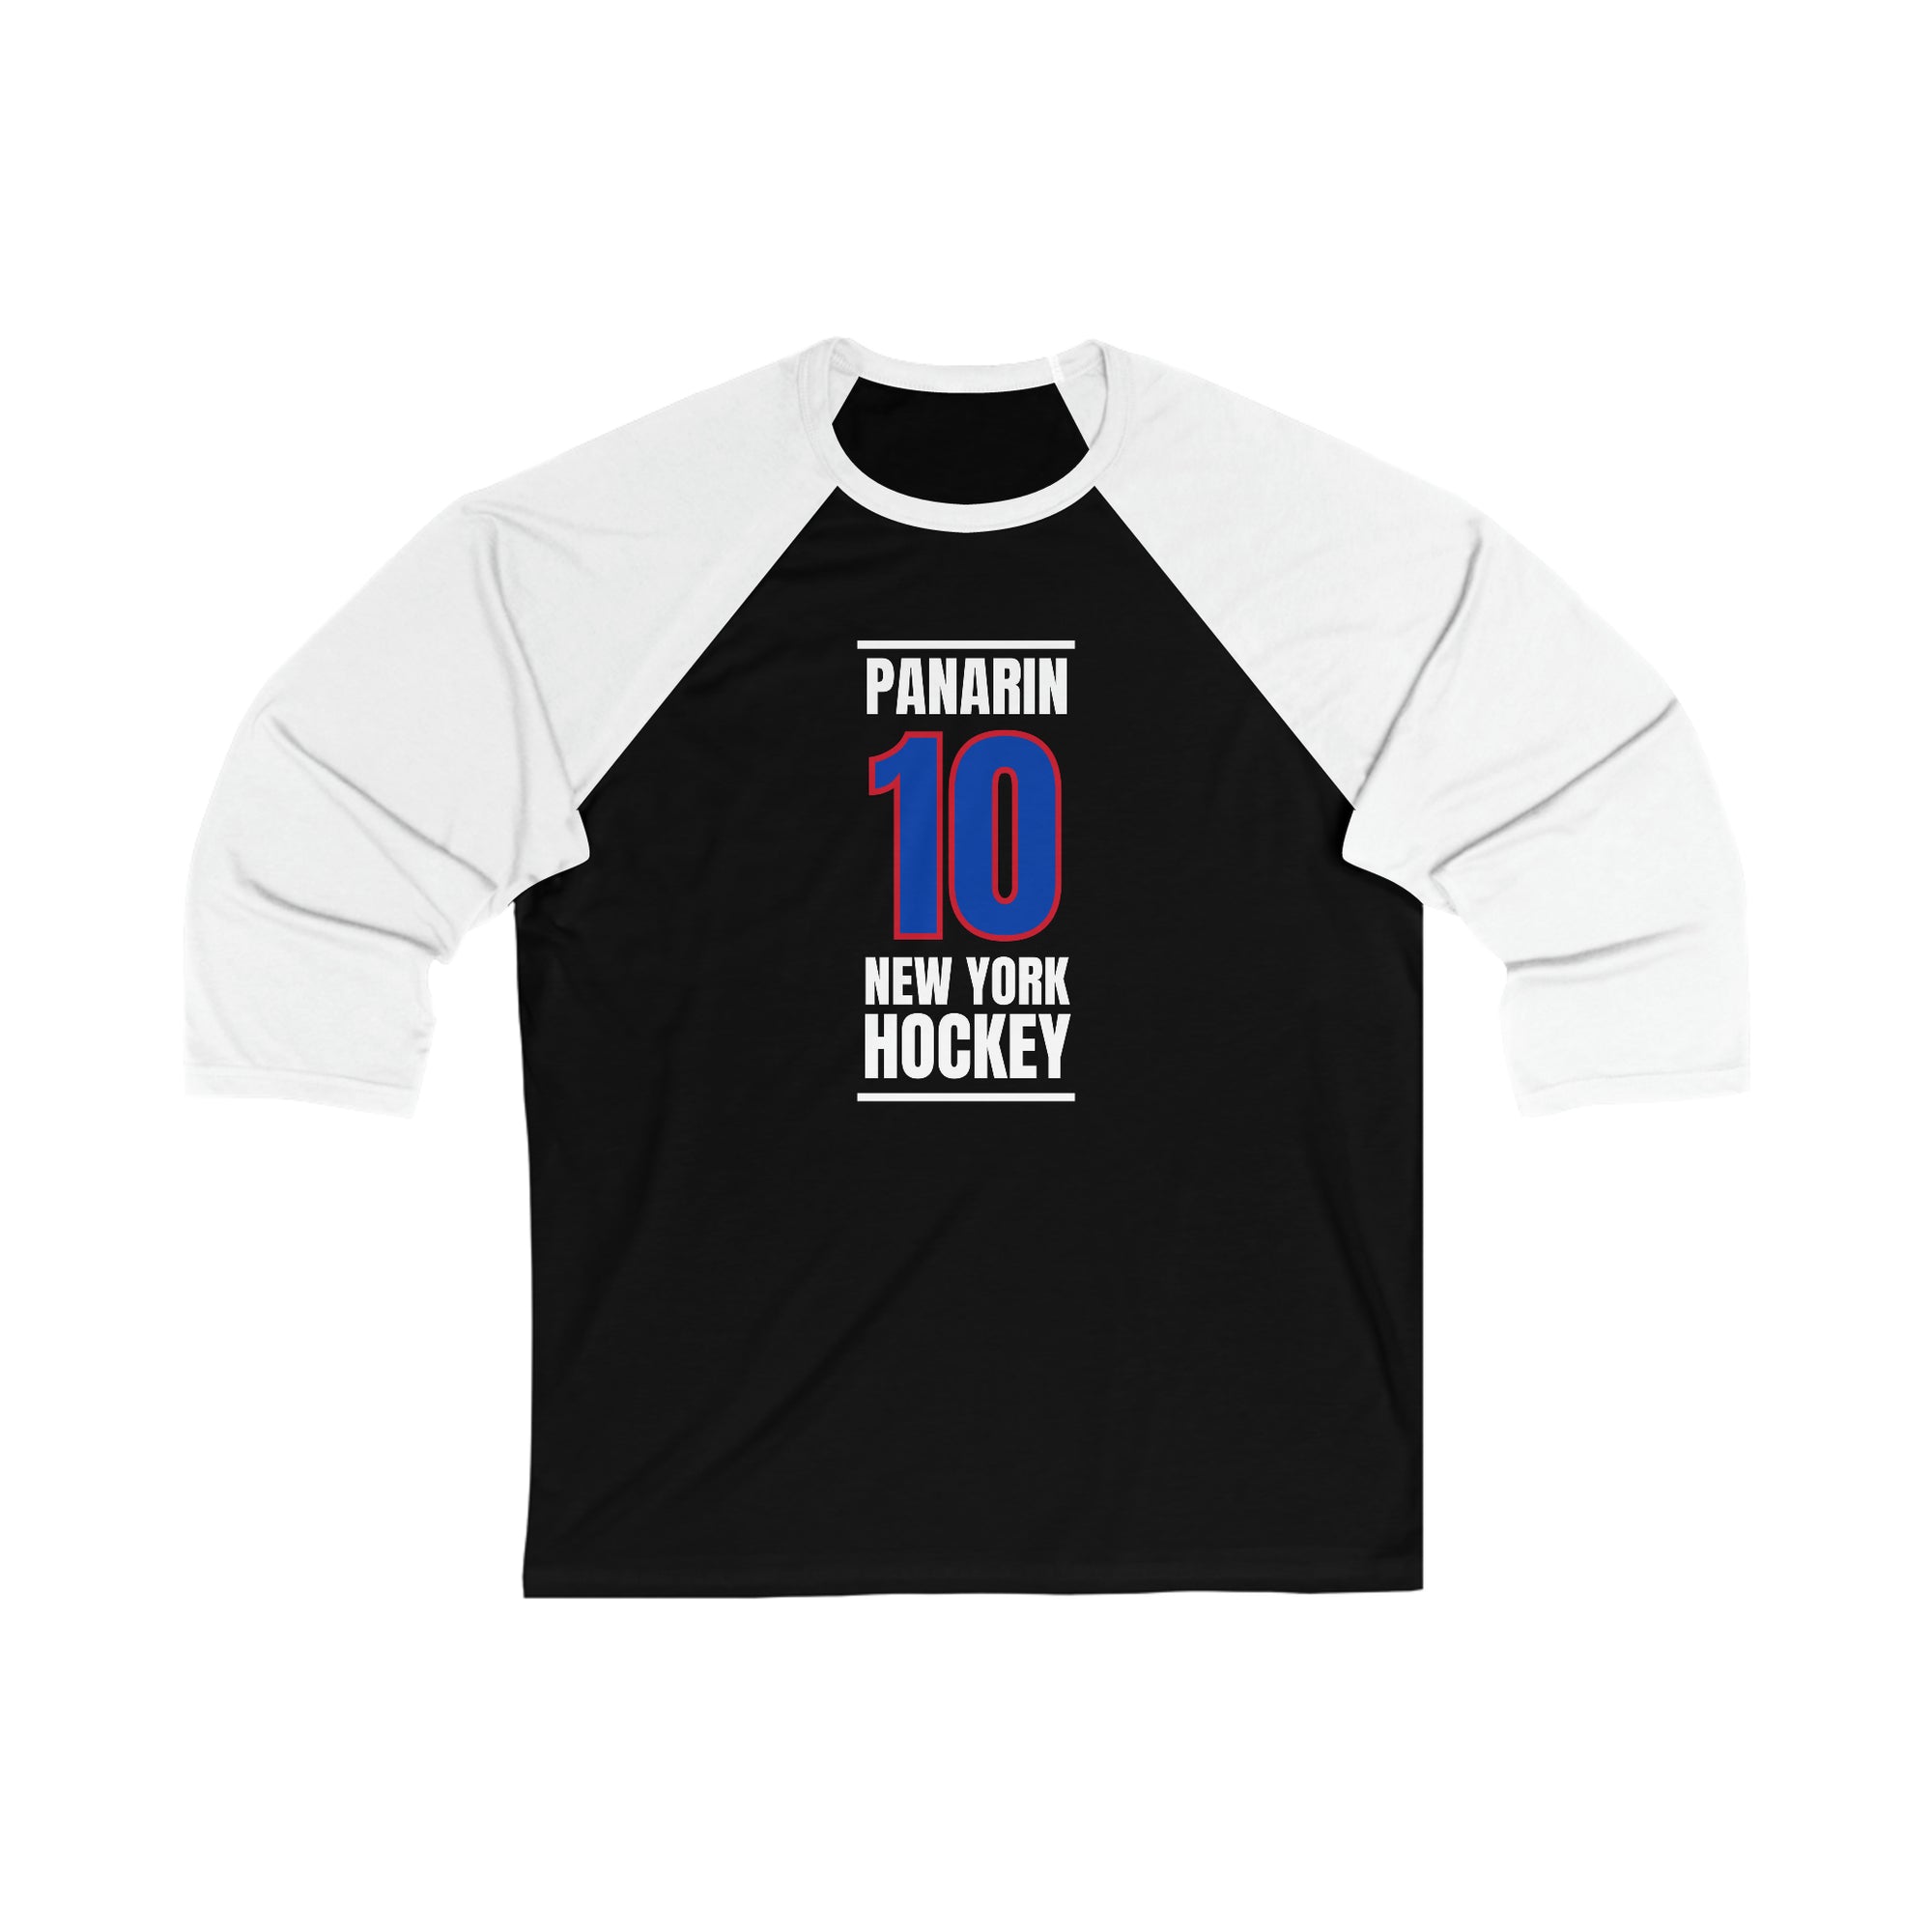 Artemi Panarin T-Shirts for Sale